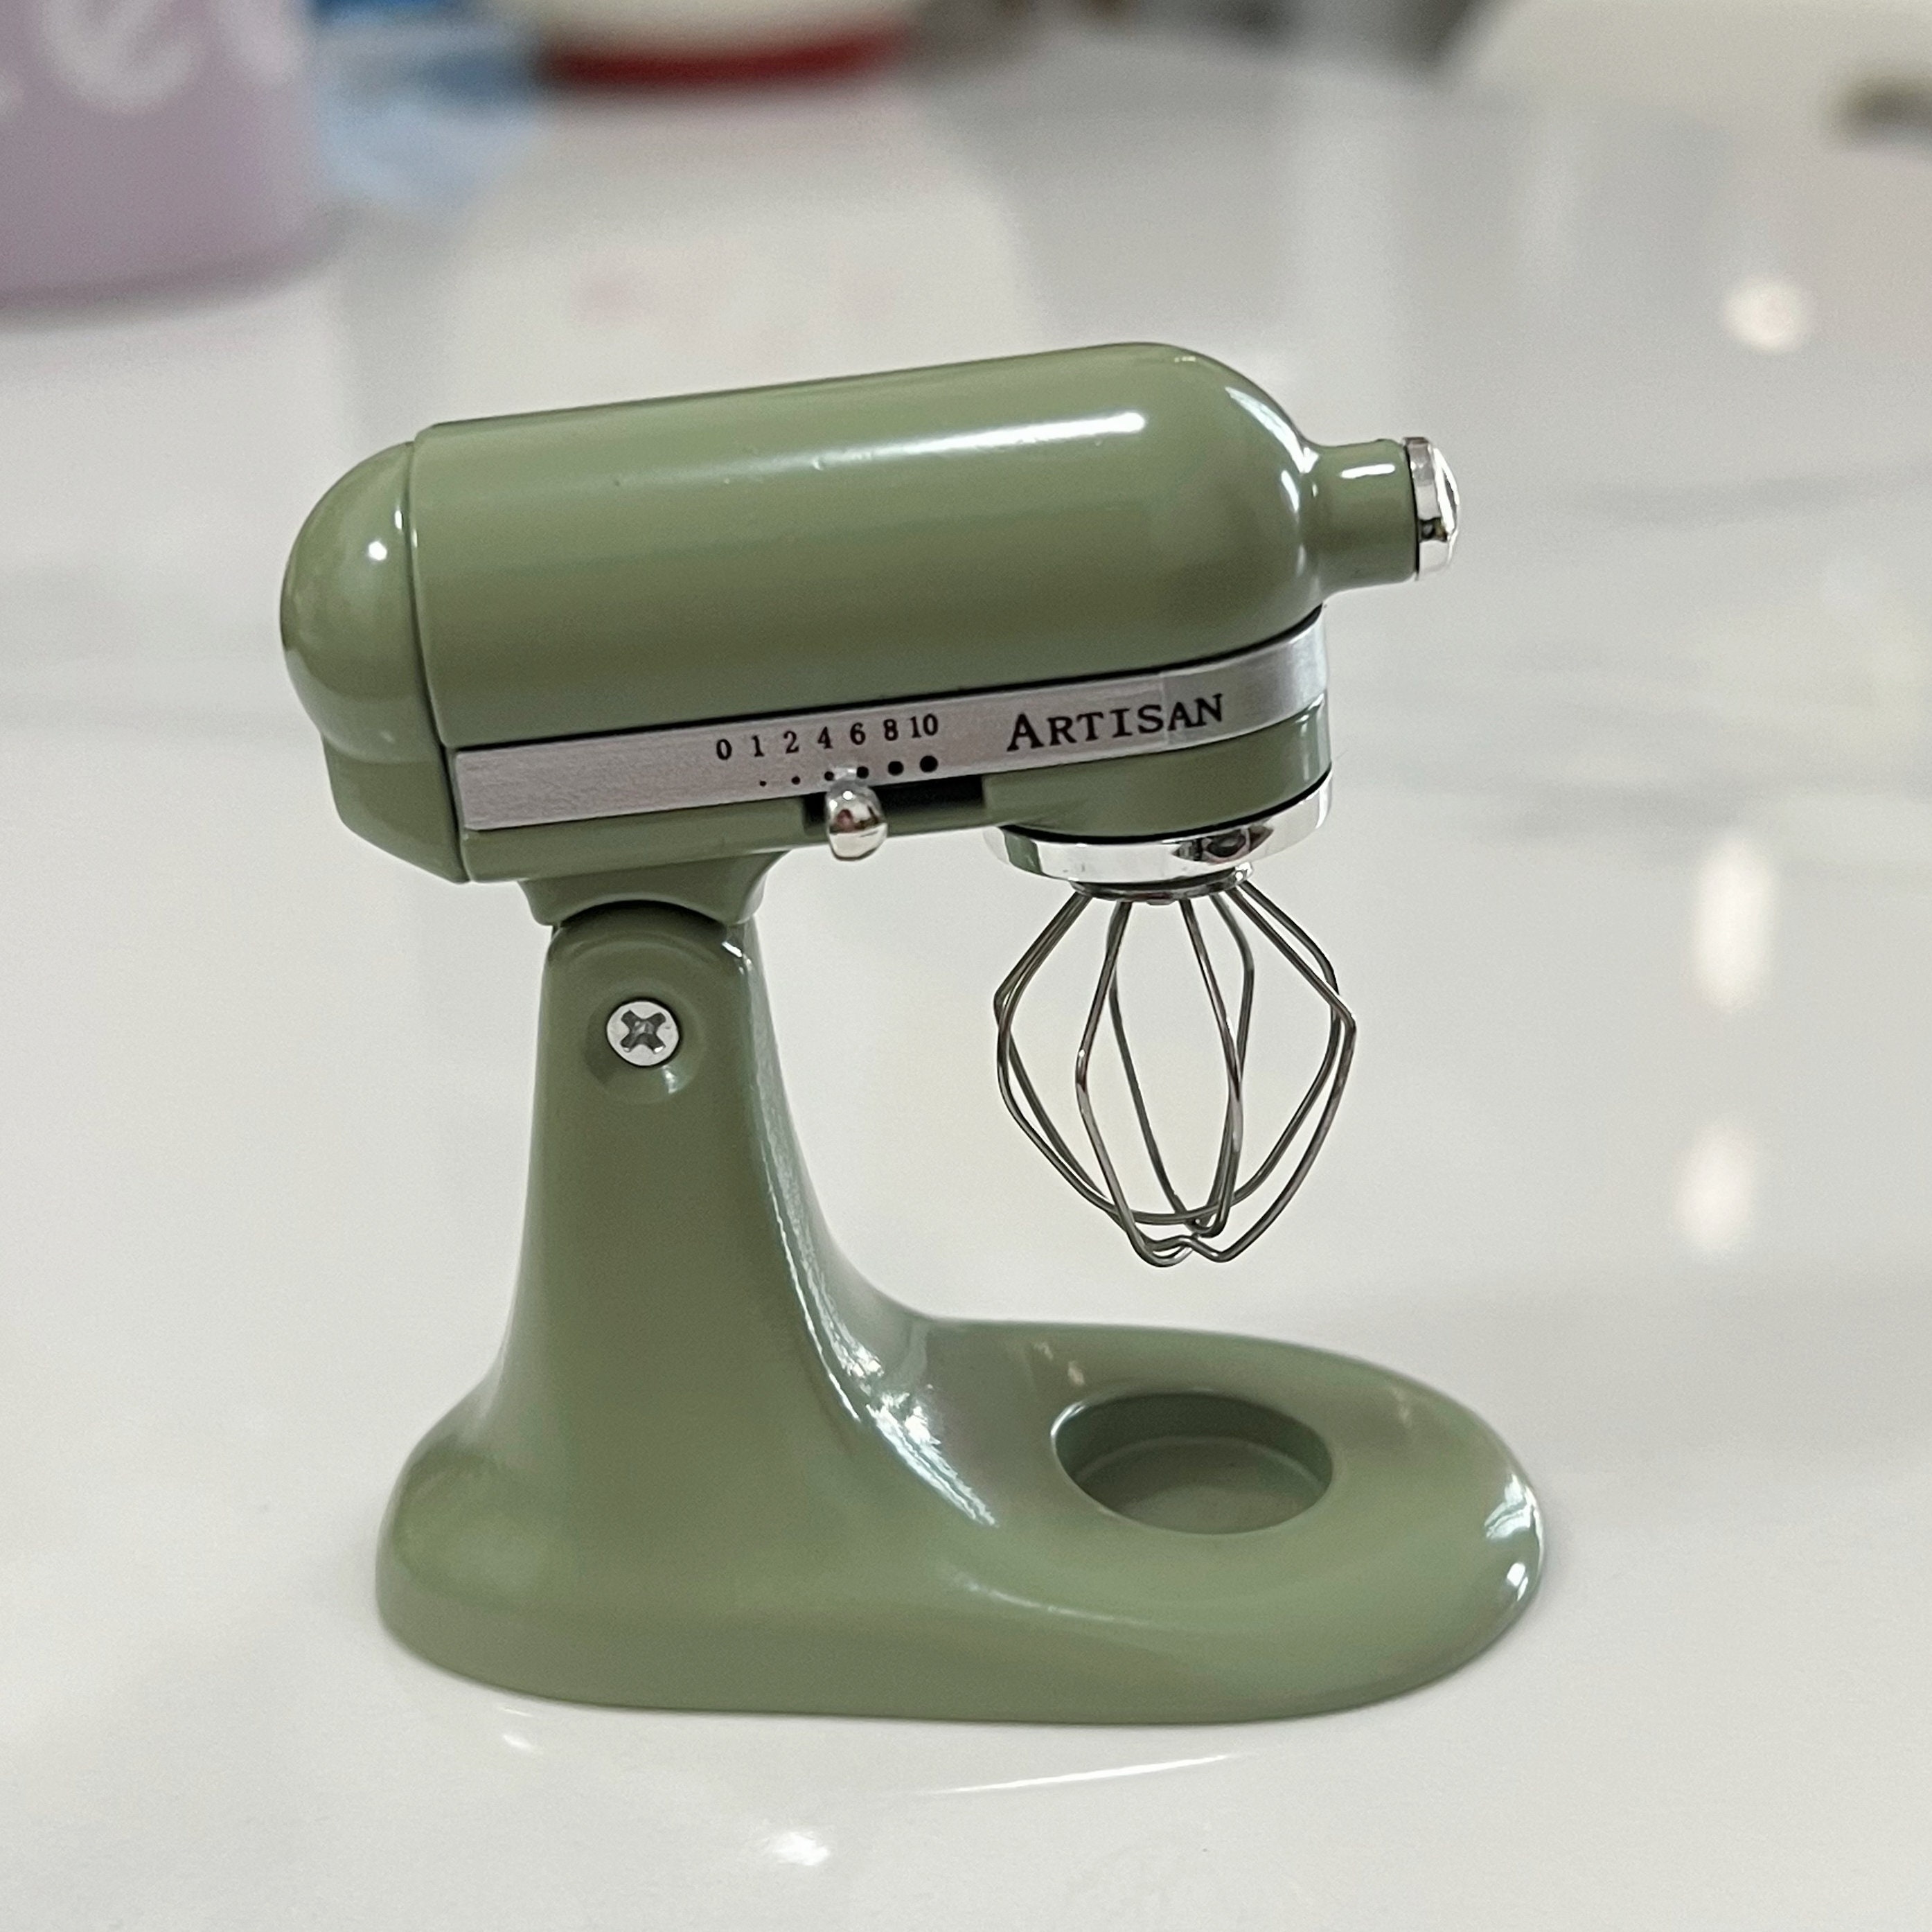 Miniature kitchen small appliances : Miniature kitchen Aid mixer , Miniature  juicer , Miniatur…